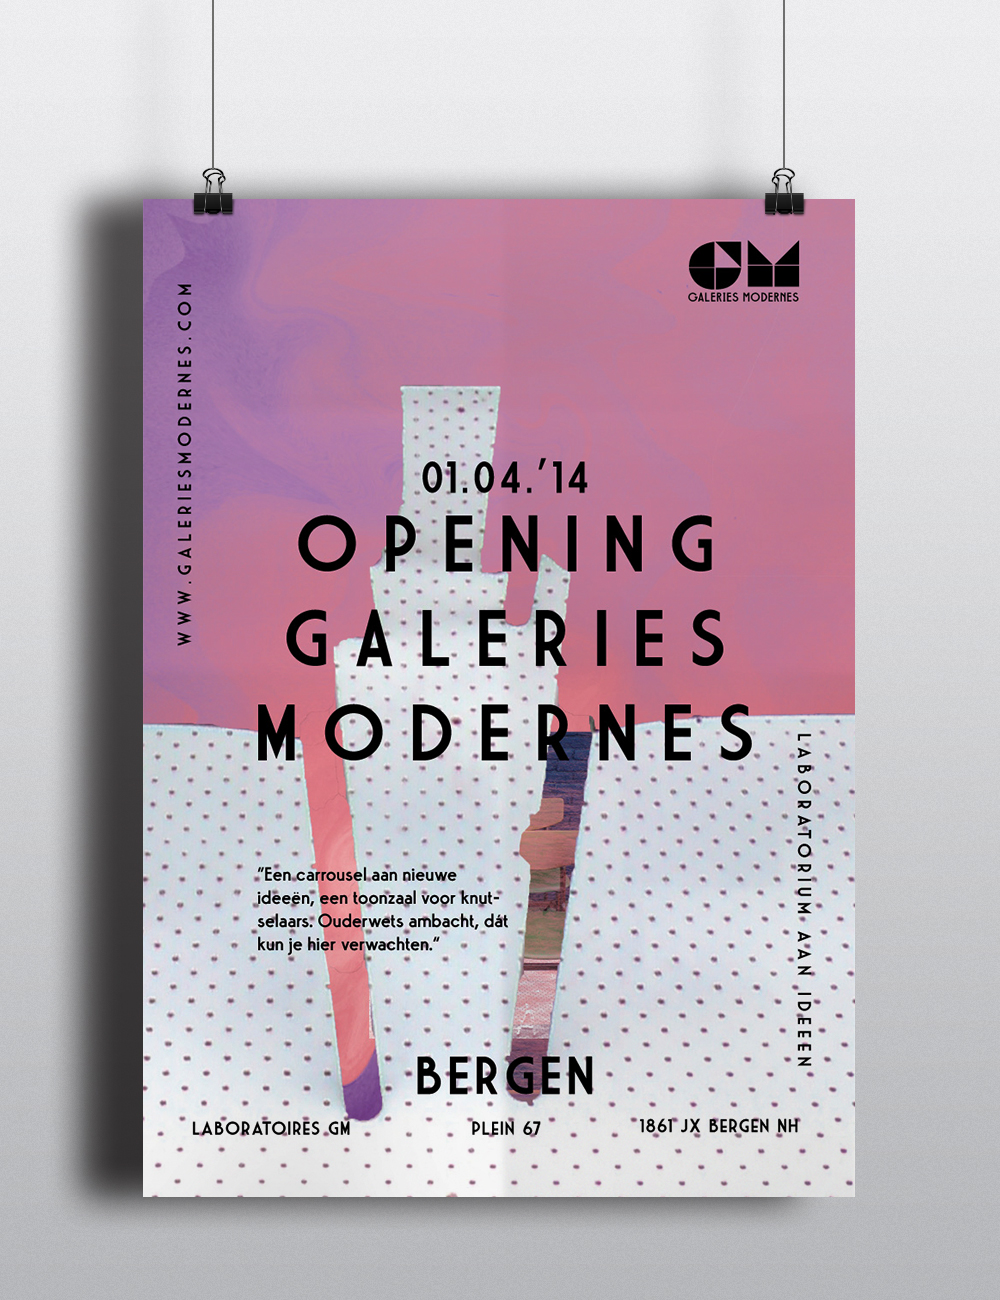 art gallery Art Gallery  posters Galeries Modernes studio atelier design Poster Design logo identity